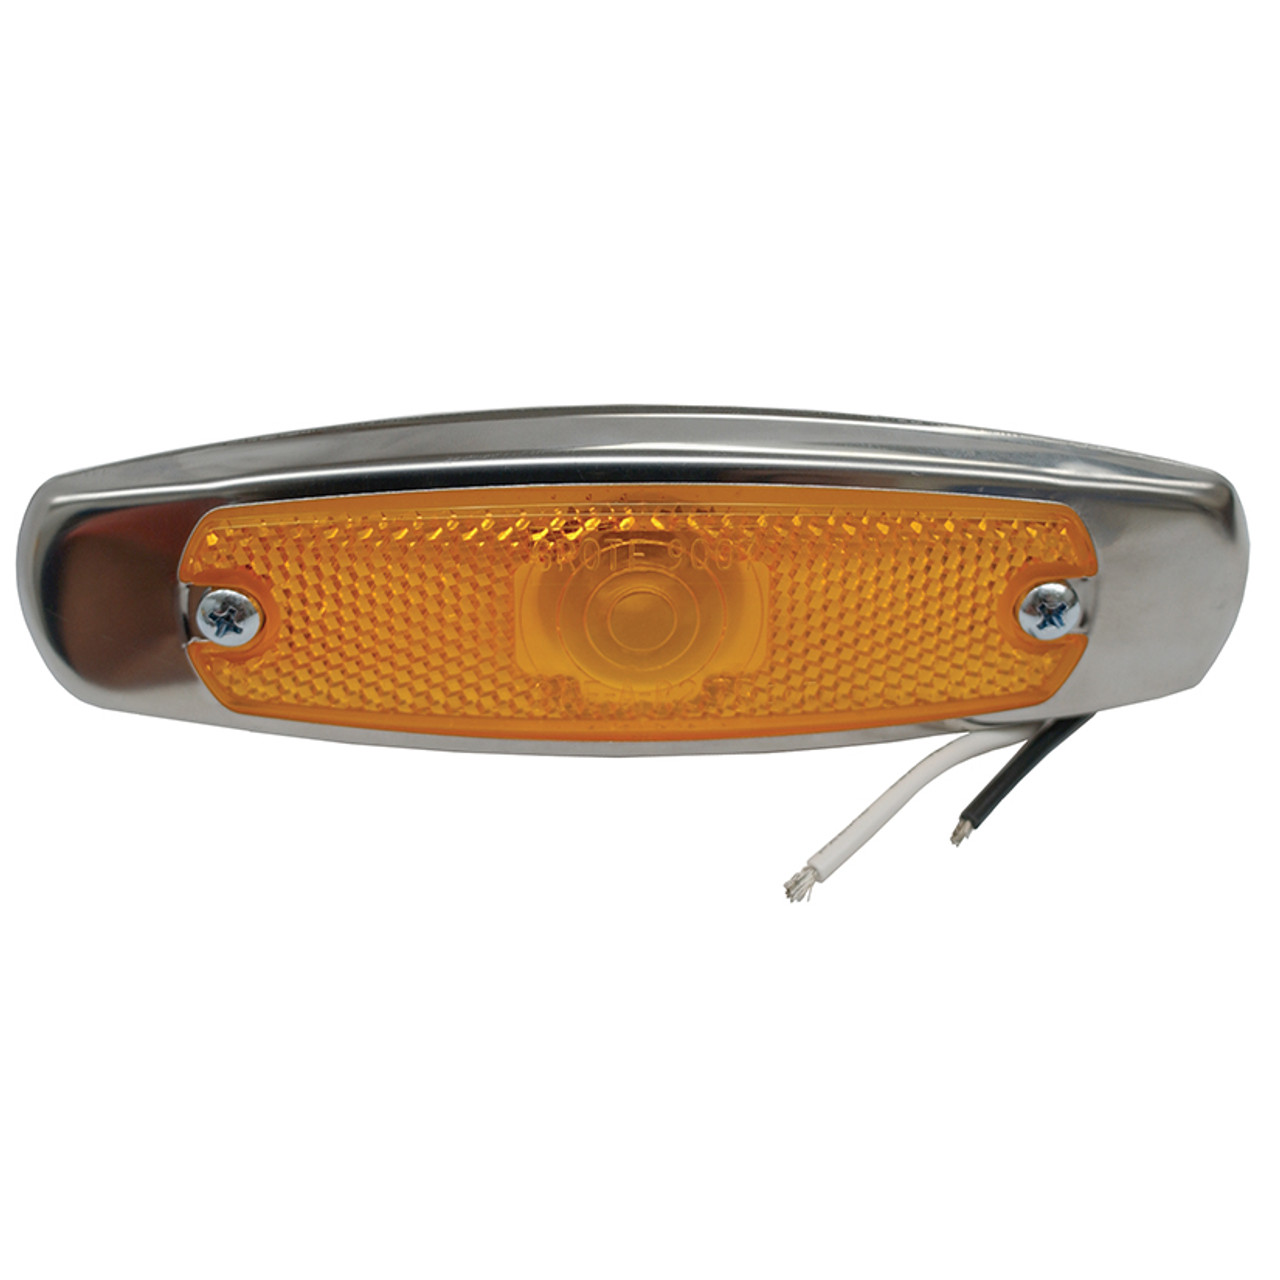 Low-Profile Clearance/Marker Lamp w/Built-in Reflector & Bezel - Amber  45663